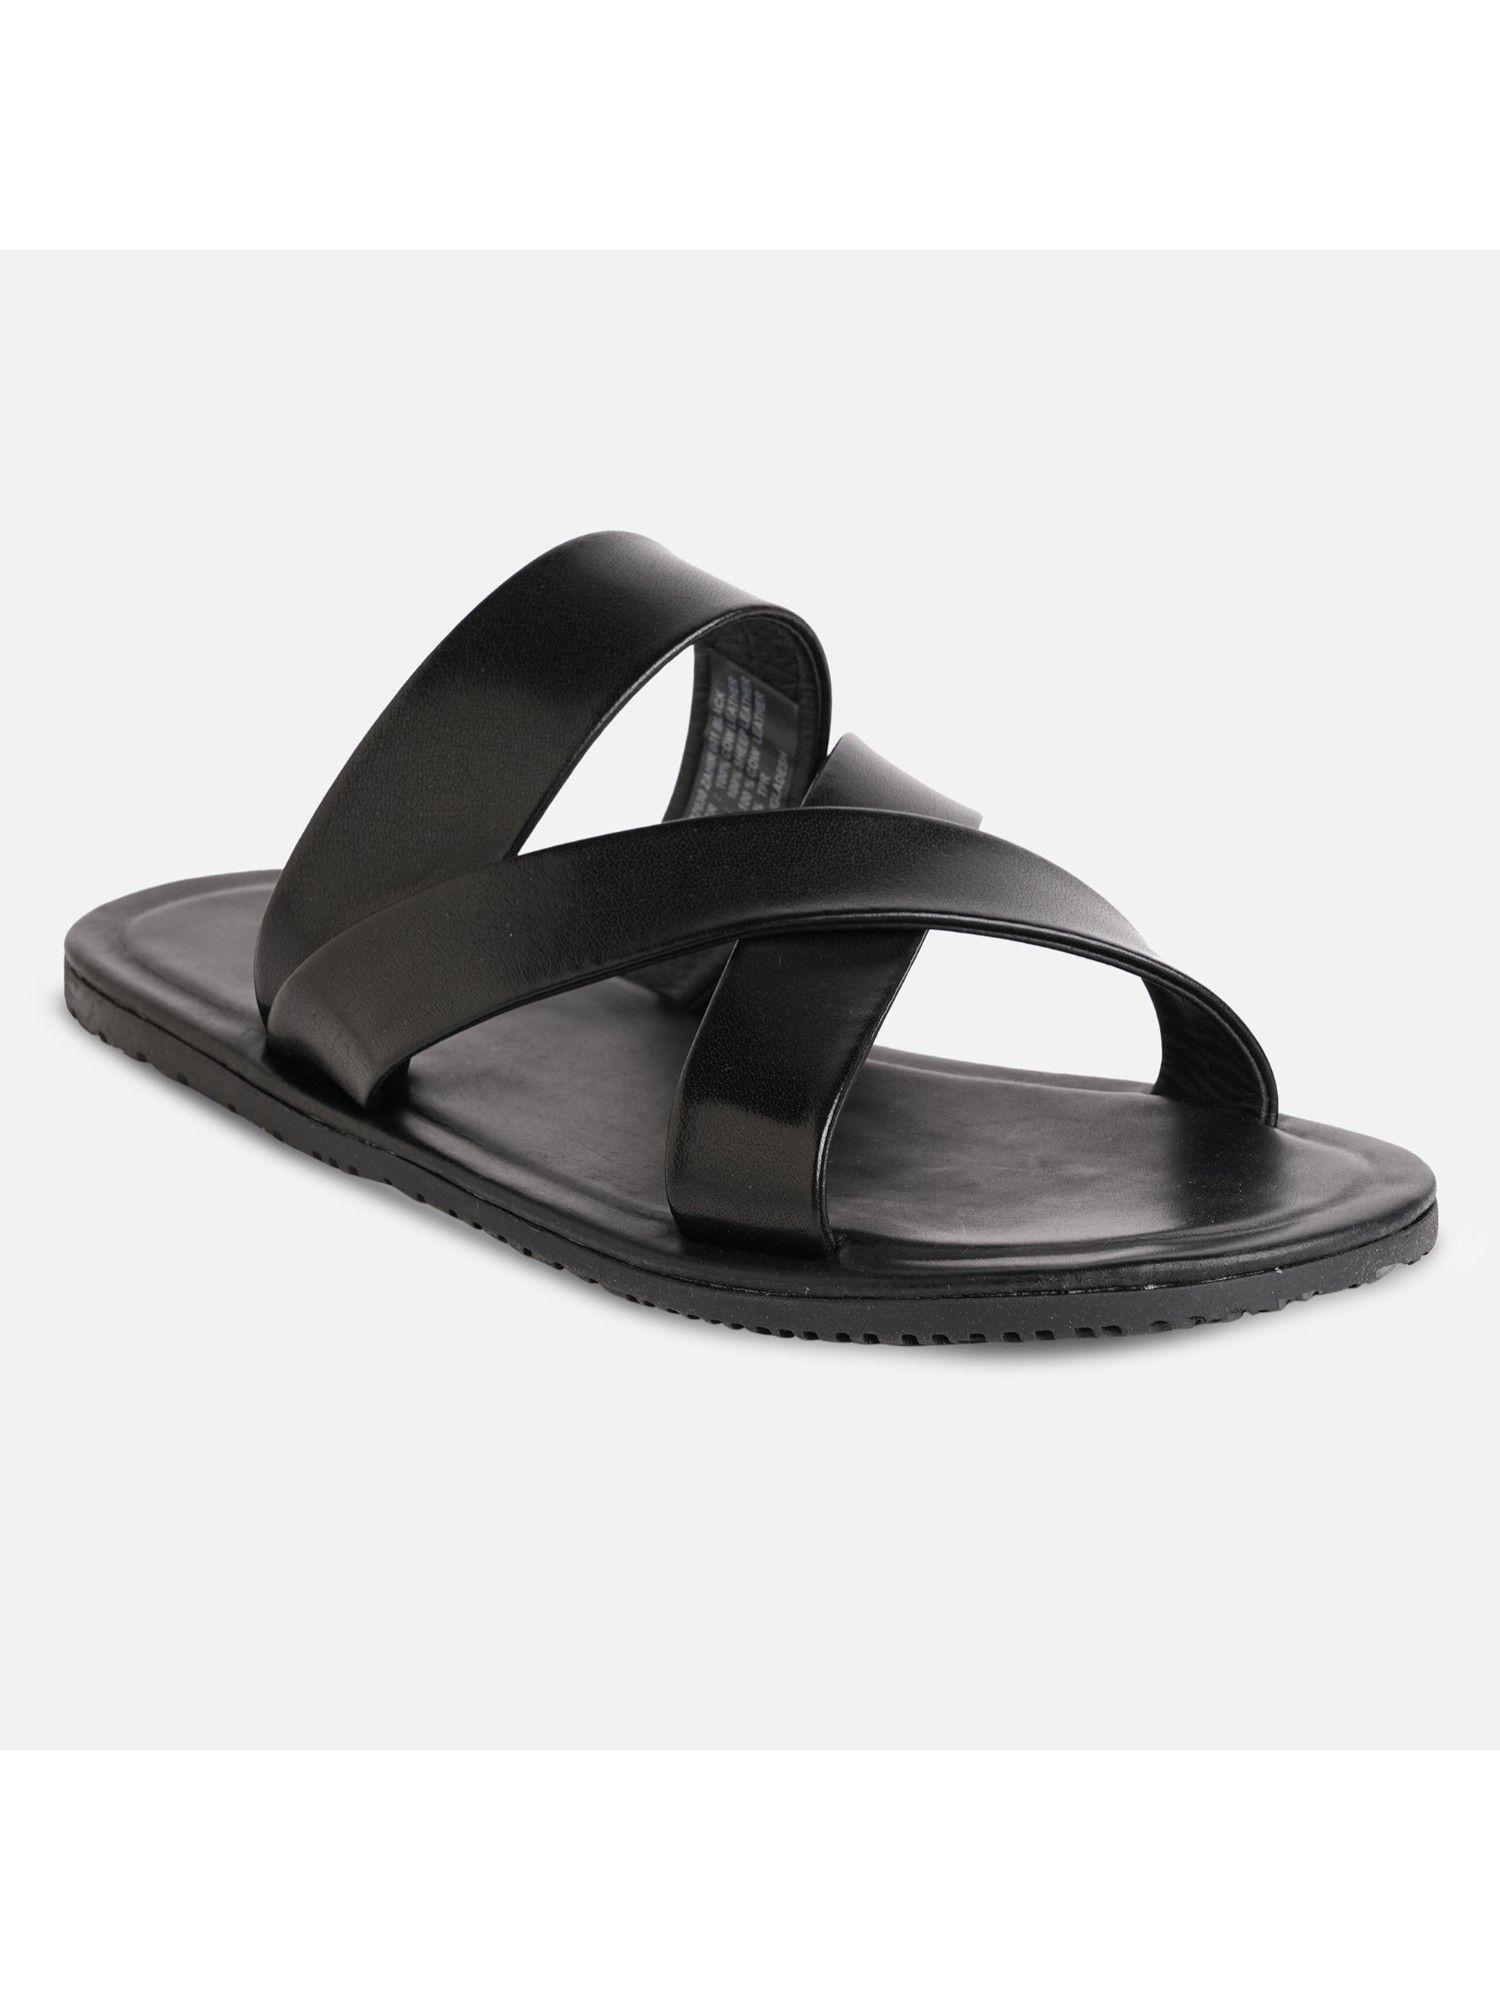 zahir-leather-black-solid-sandals